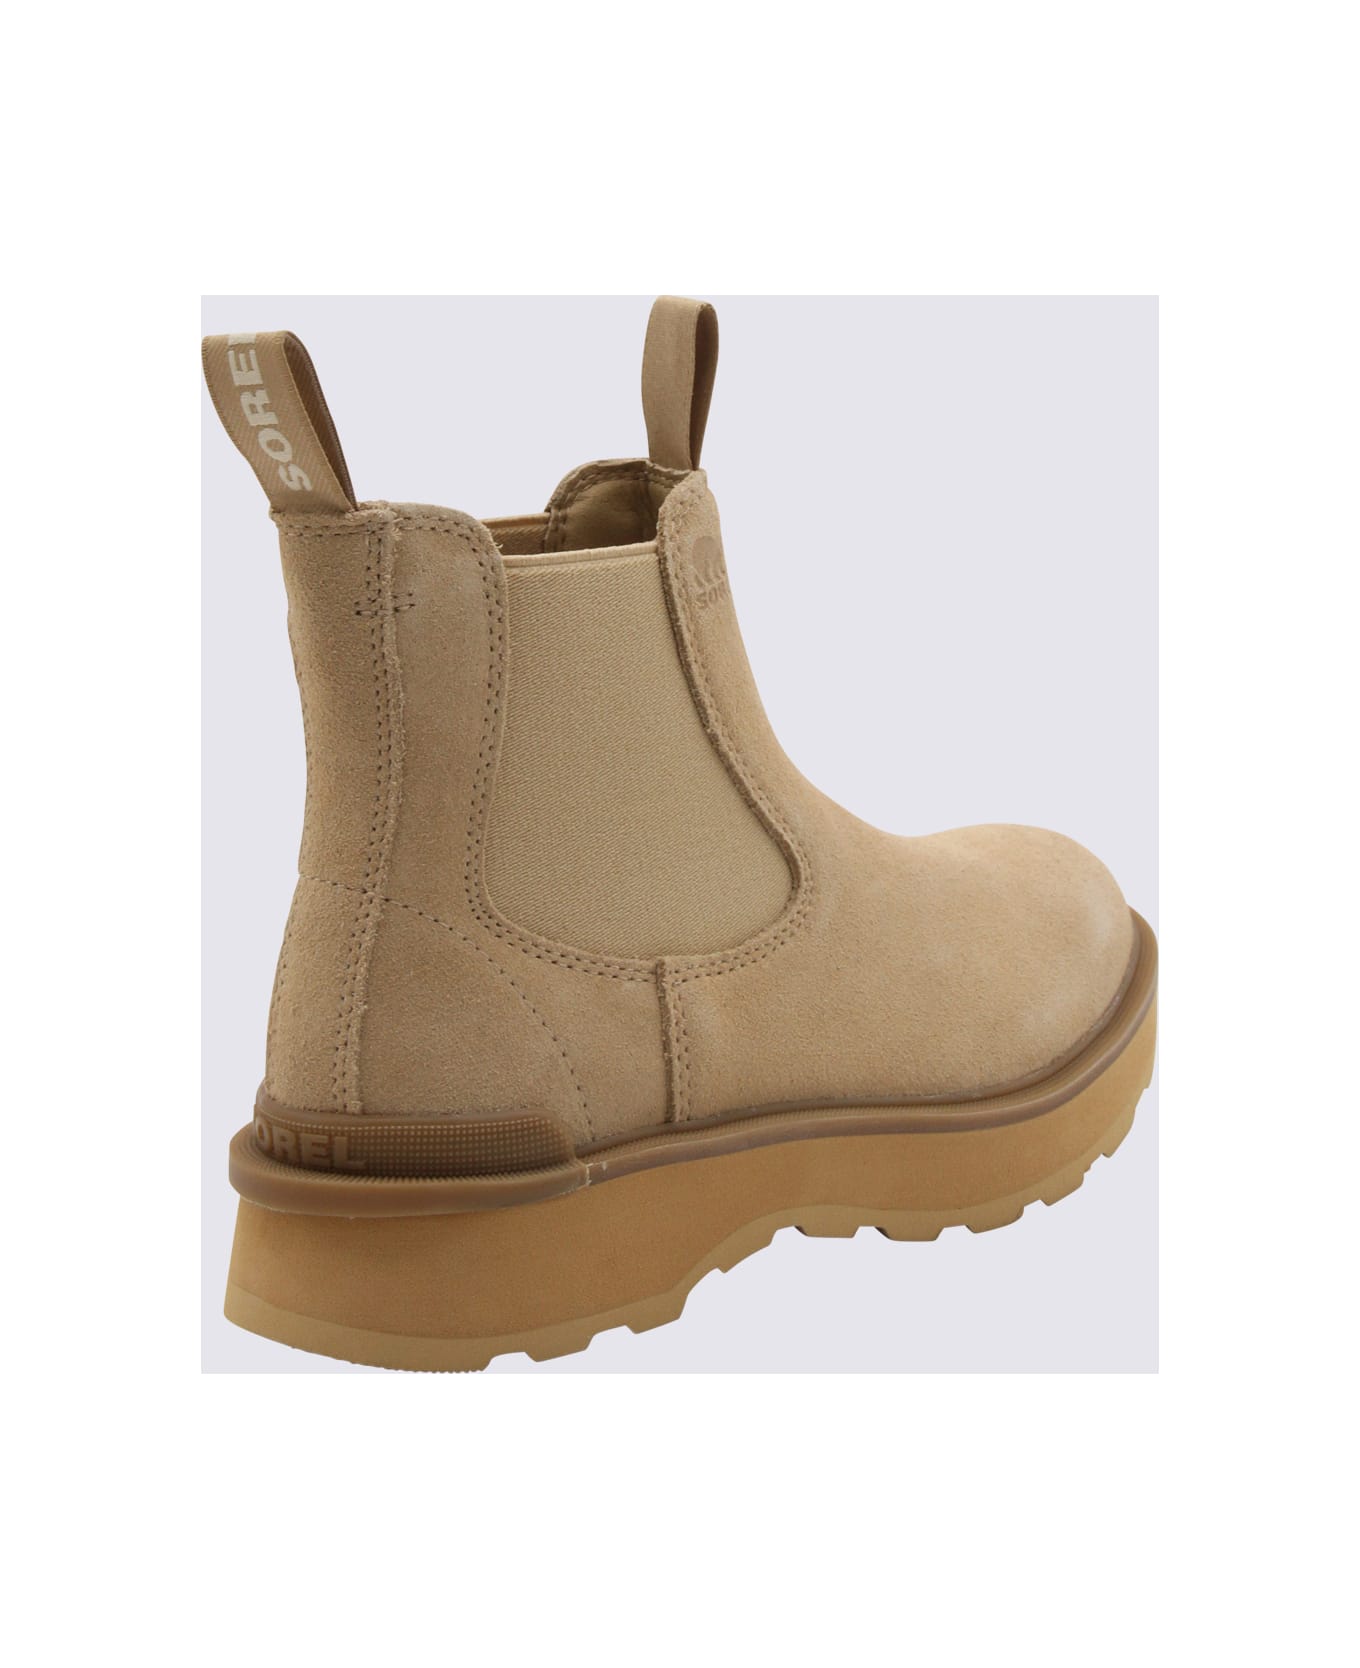 Sorel Beige Leather Chelsea Boots - CANOE/CERAMIC